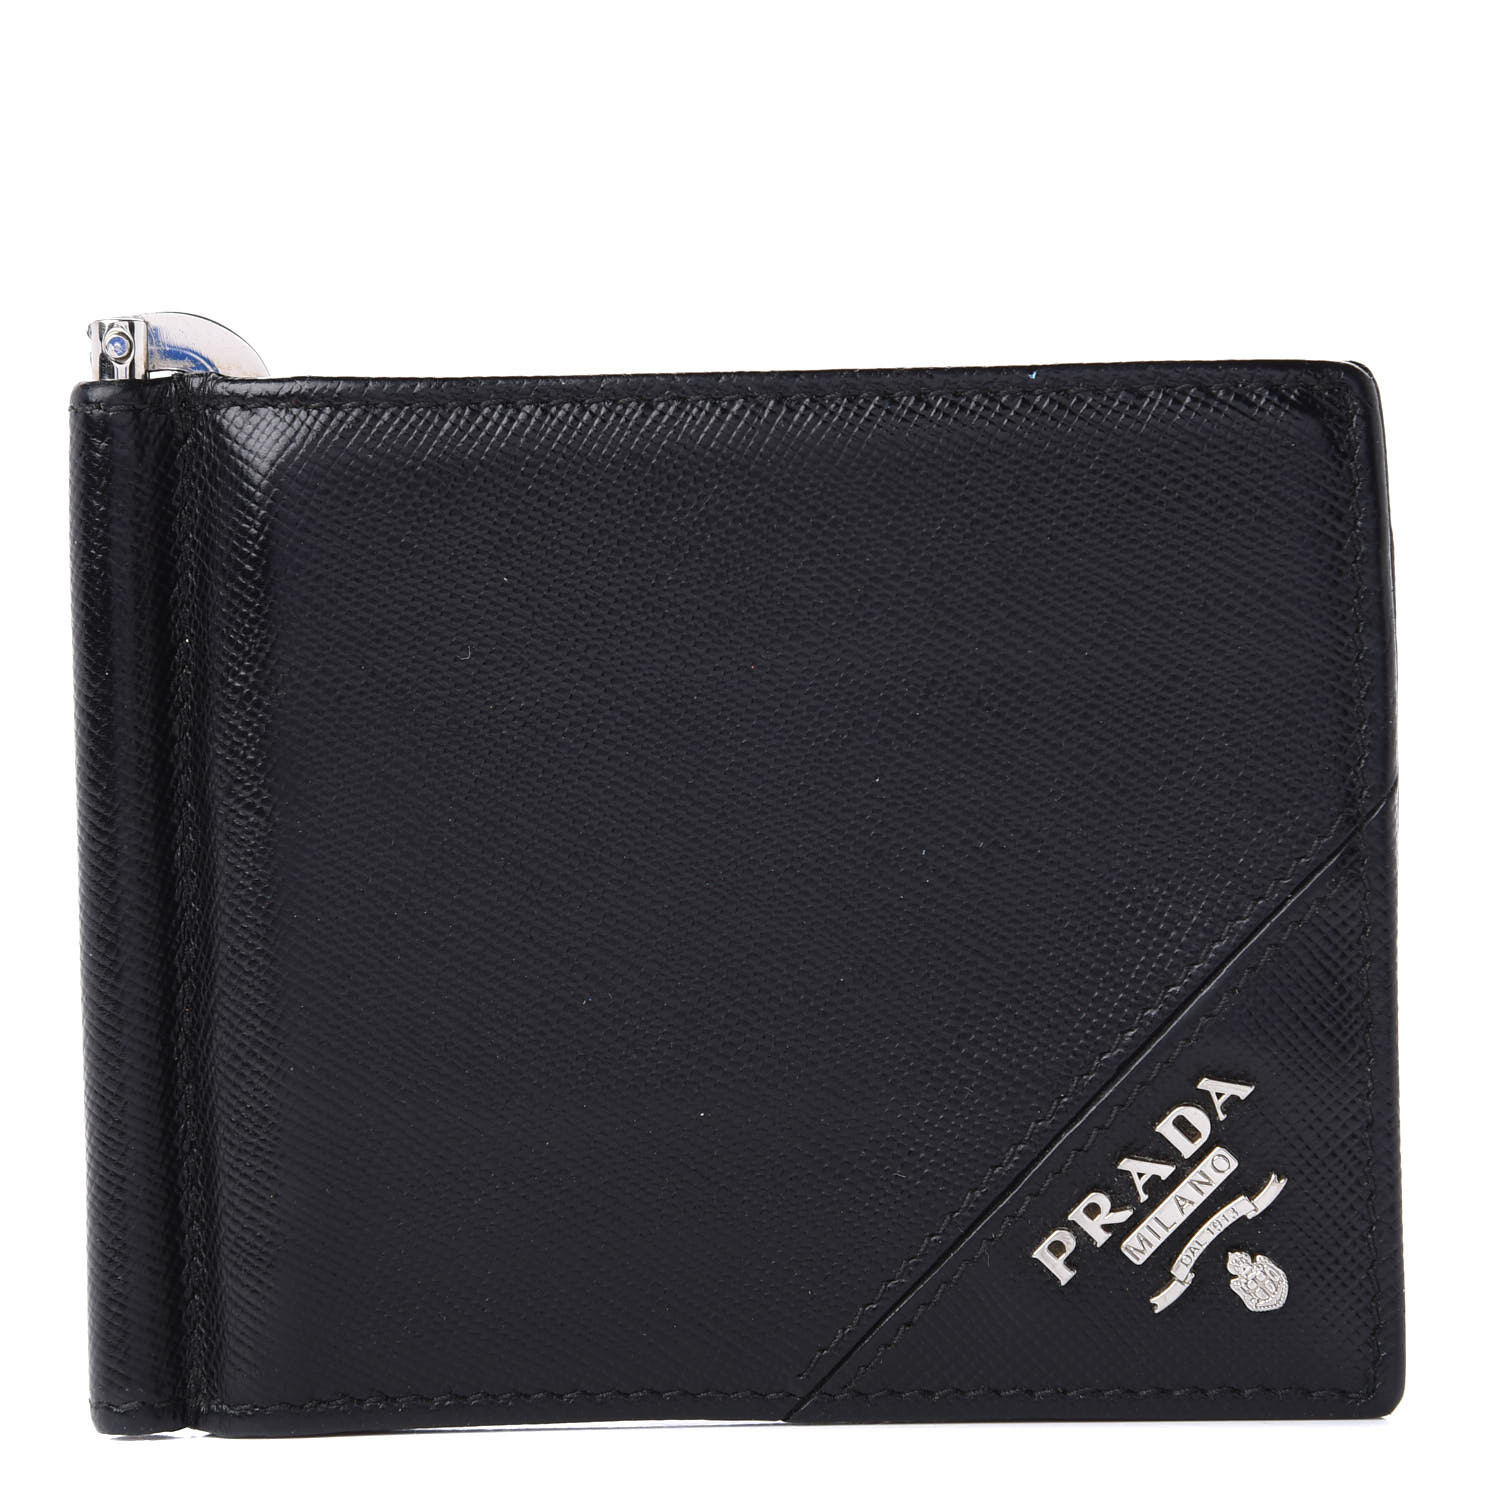 PRADA Saffiano Money Clip Bi-Fold Wallet Black 610682 | FASHIONPHILE